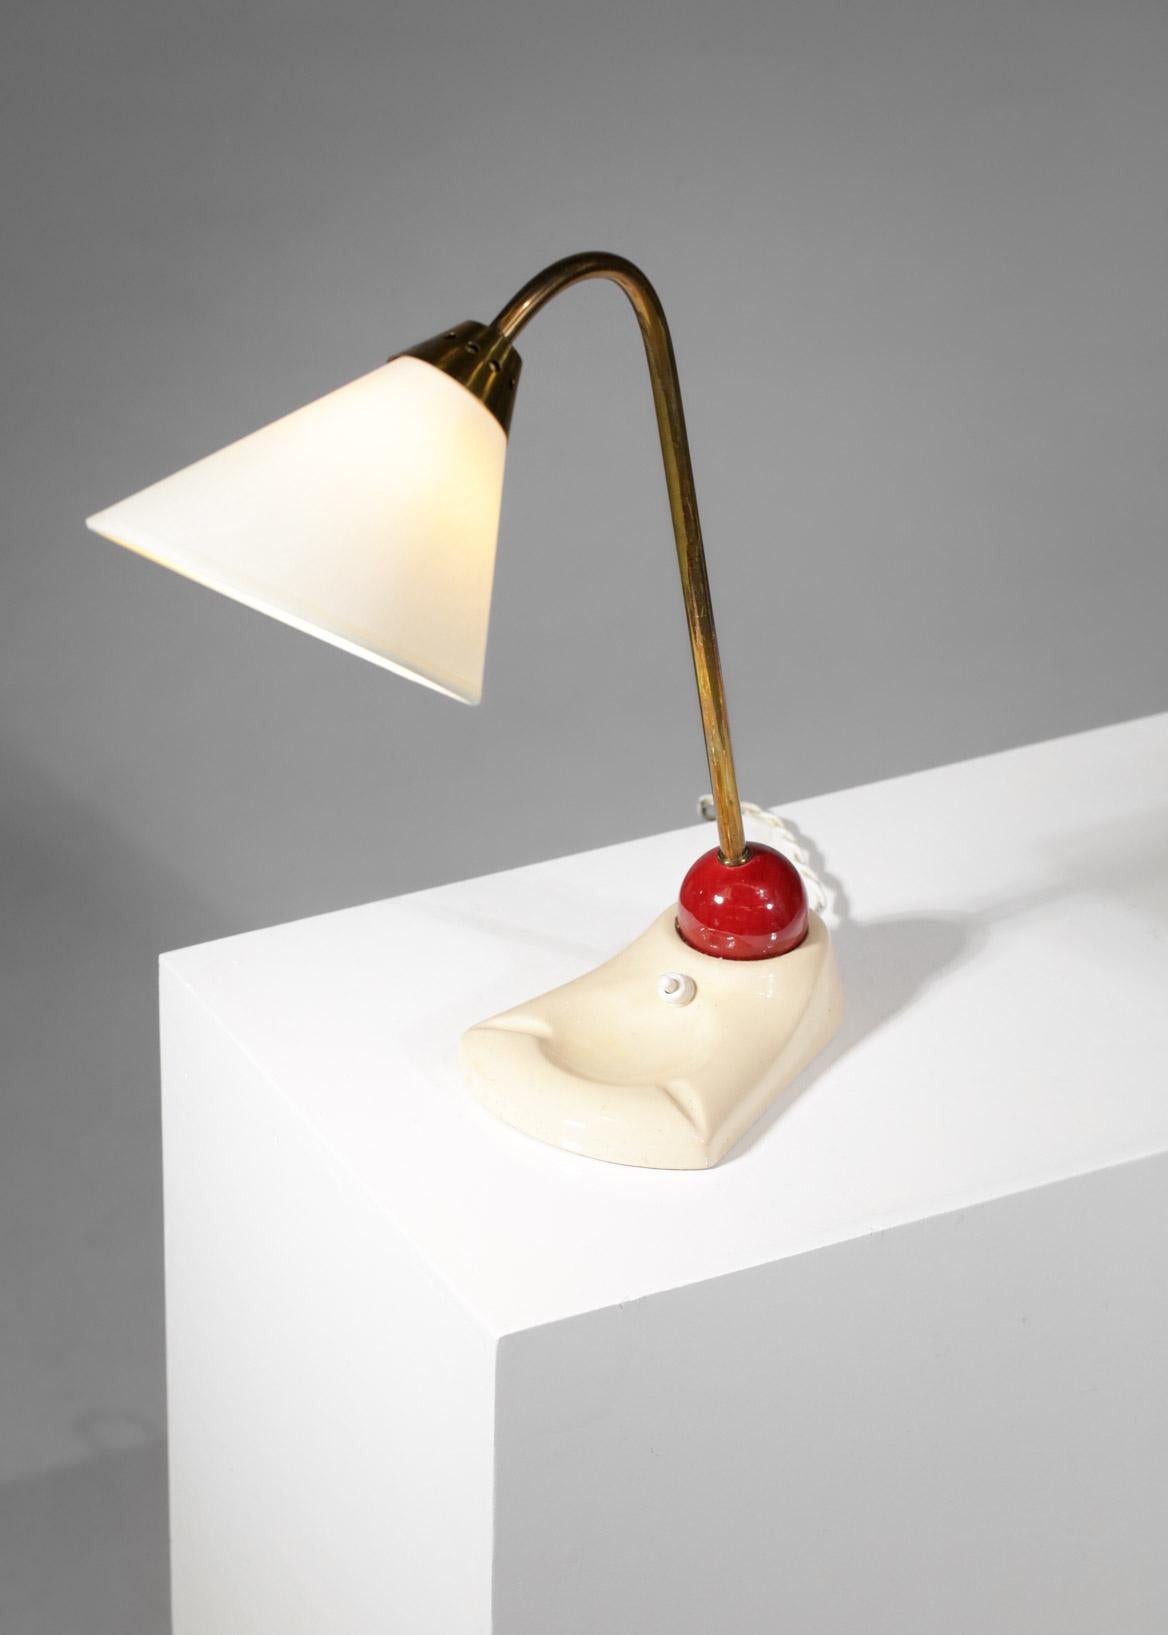 60s style lamp